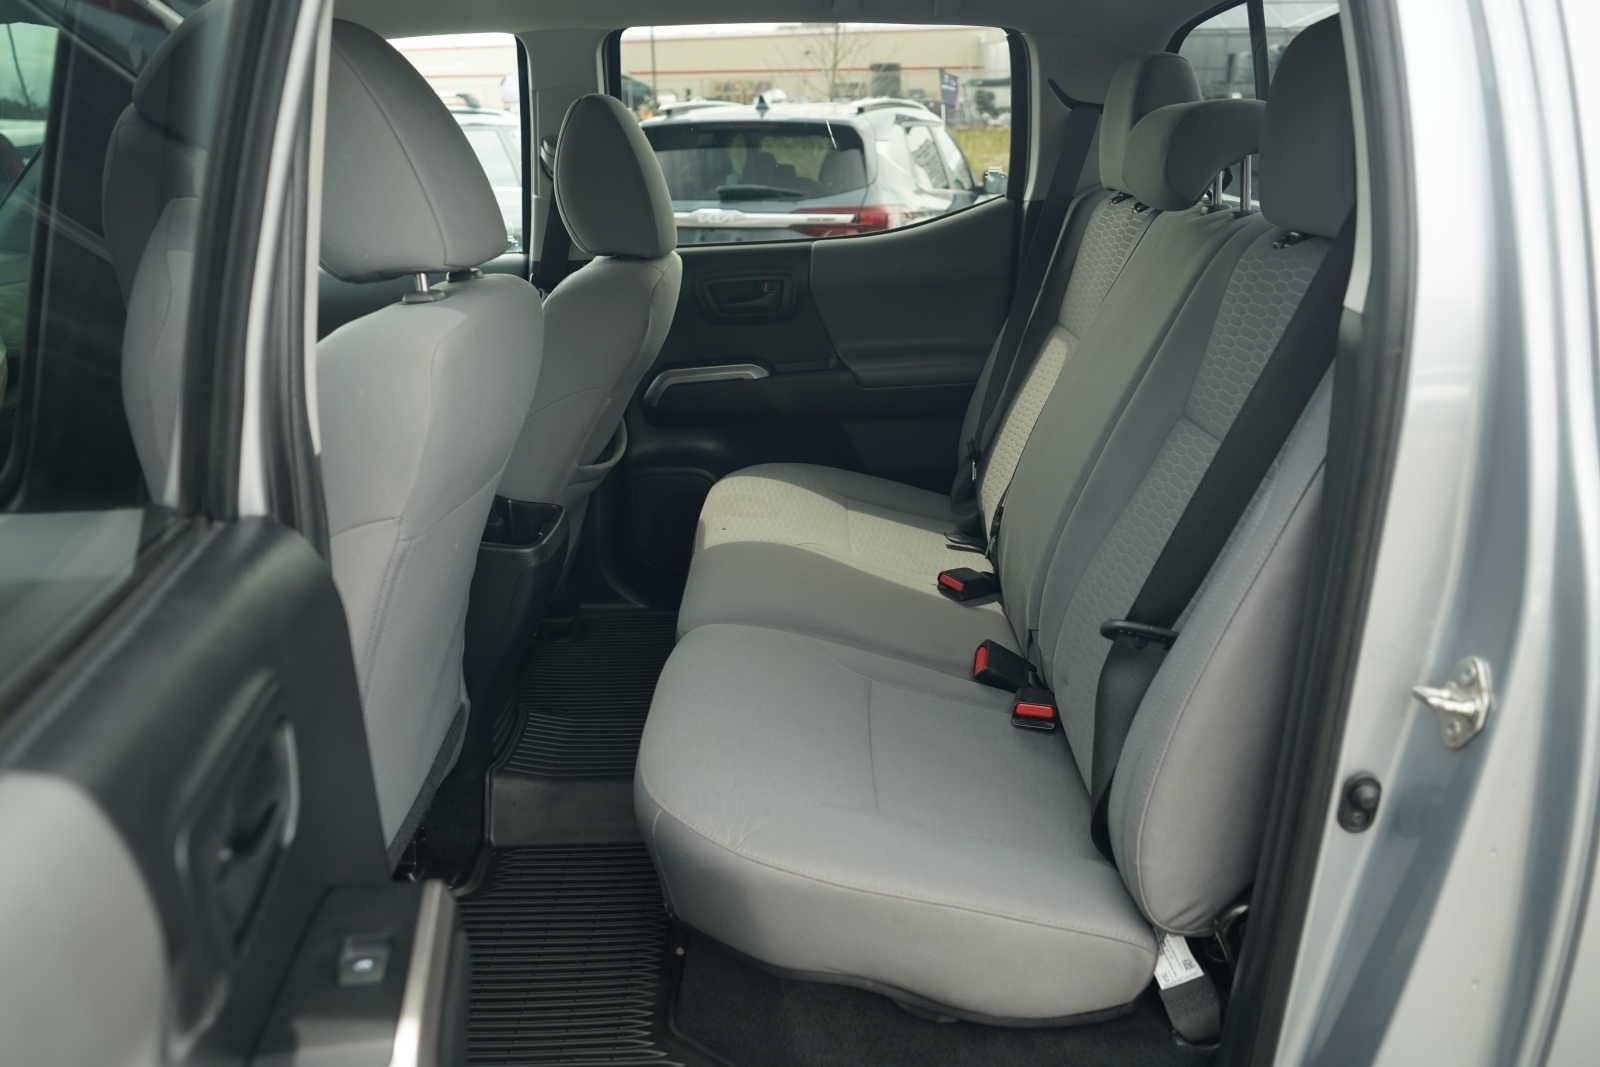 2018 Toyota Tacoma SR5 Double Cab 5 Bed V6 4x4 AT